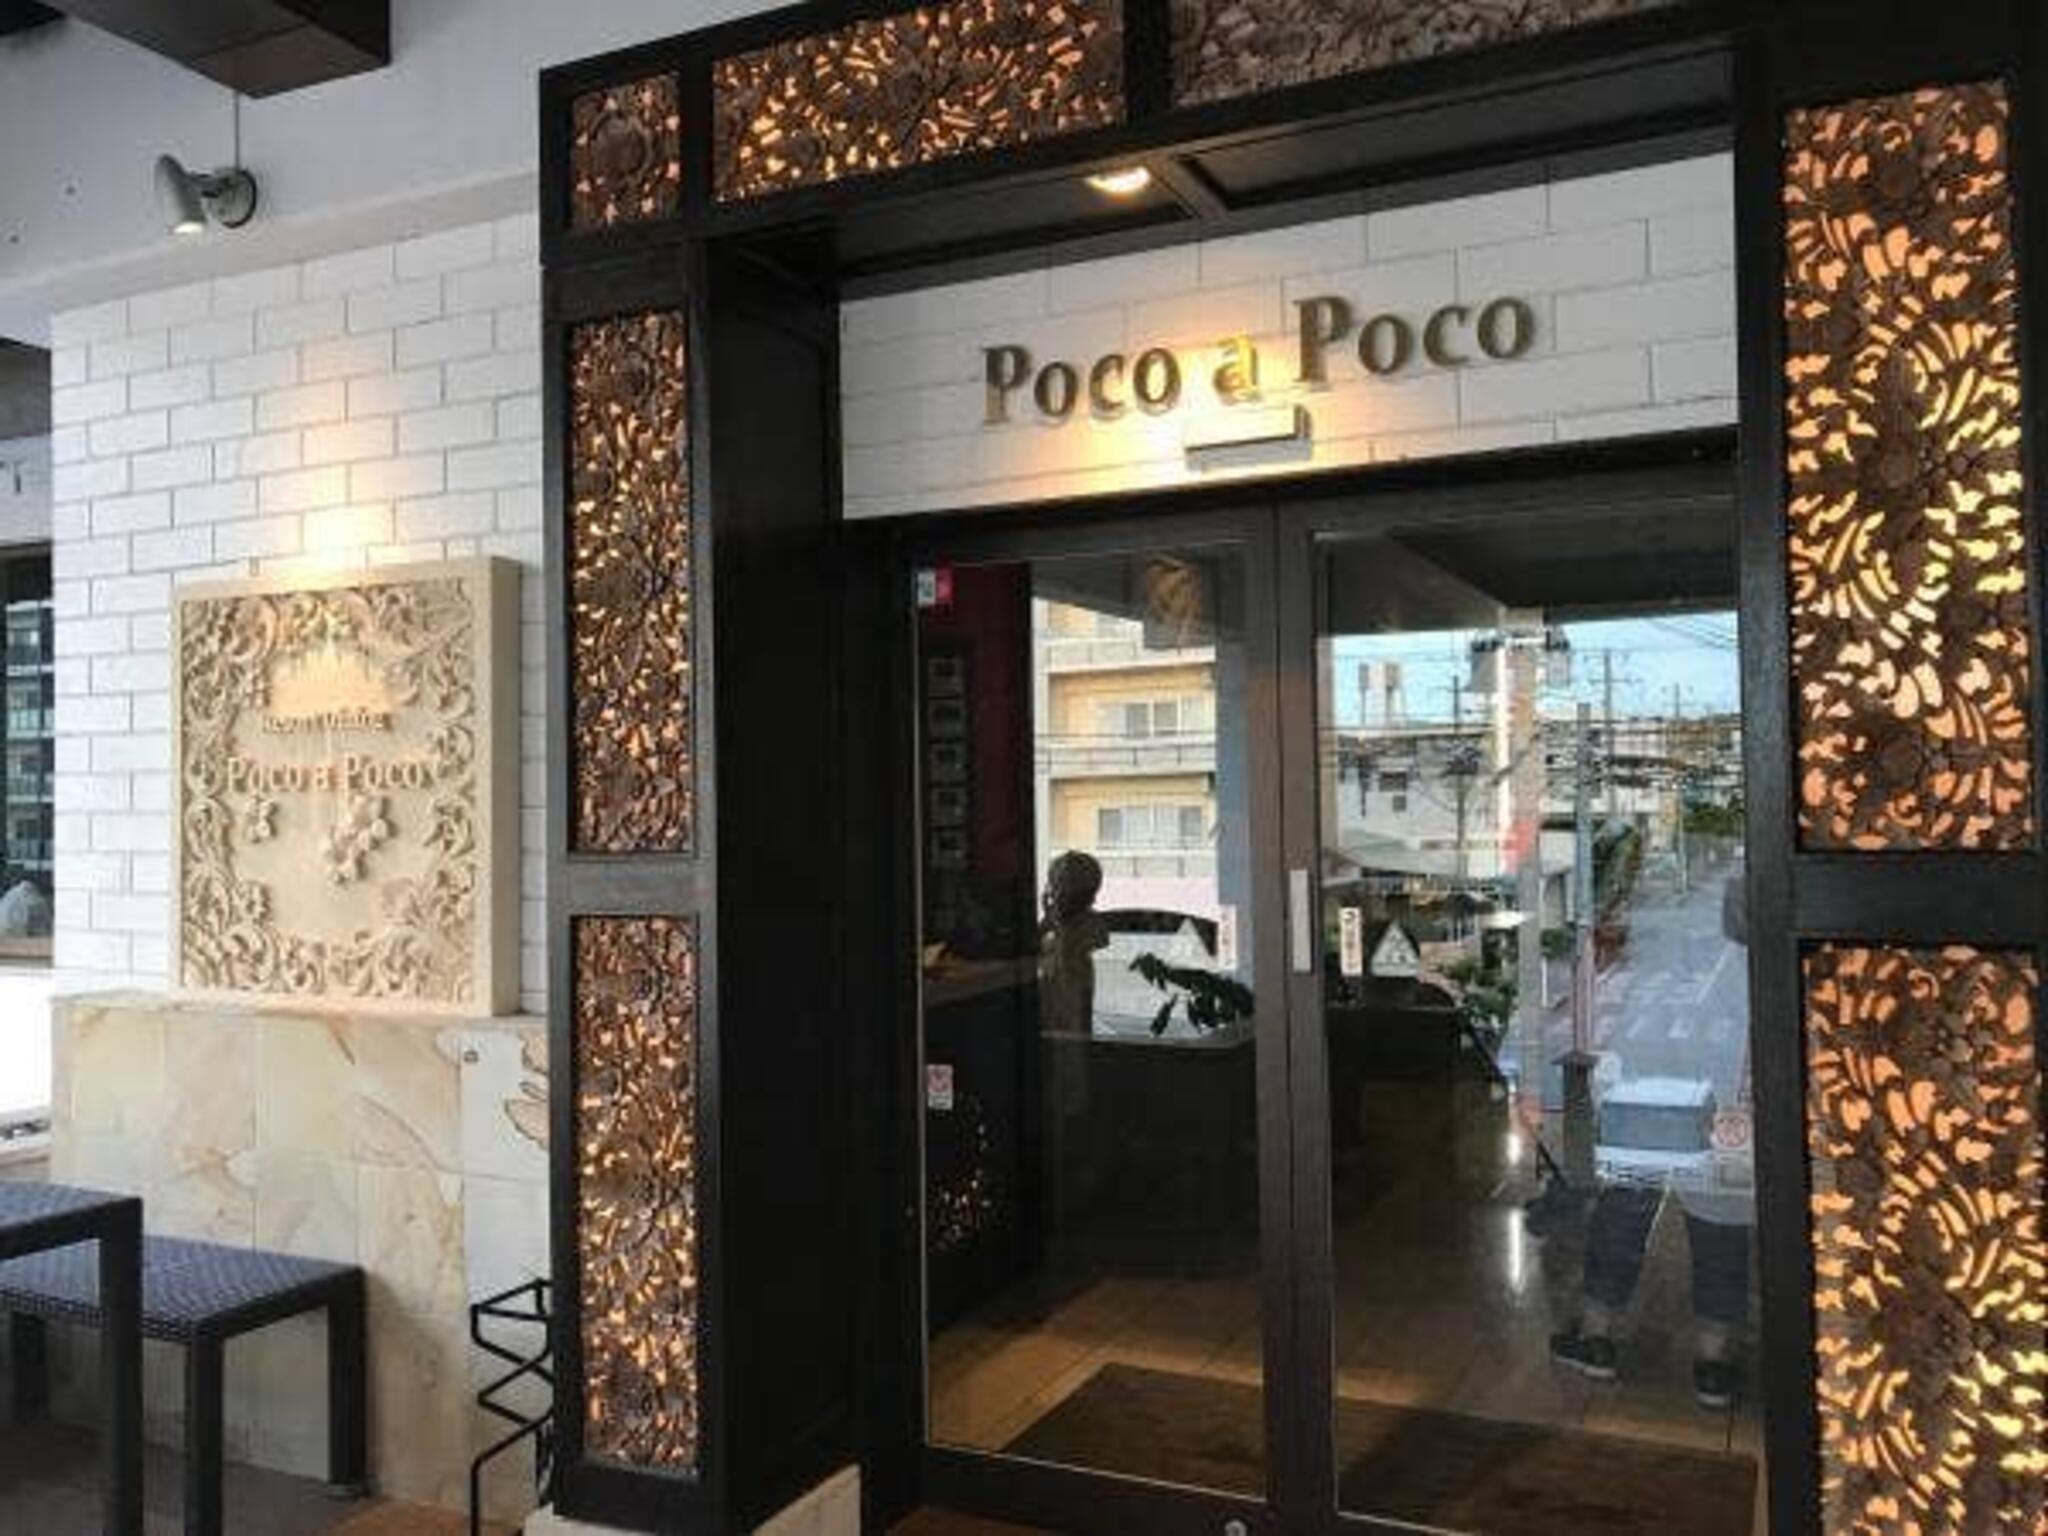 Poco a Poco 北谷店の代表写真5